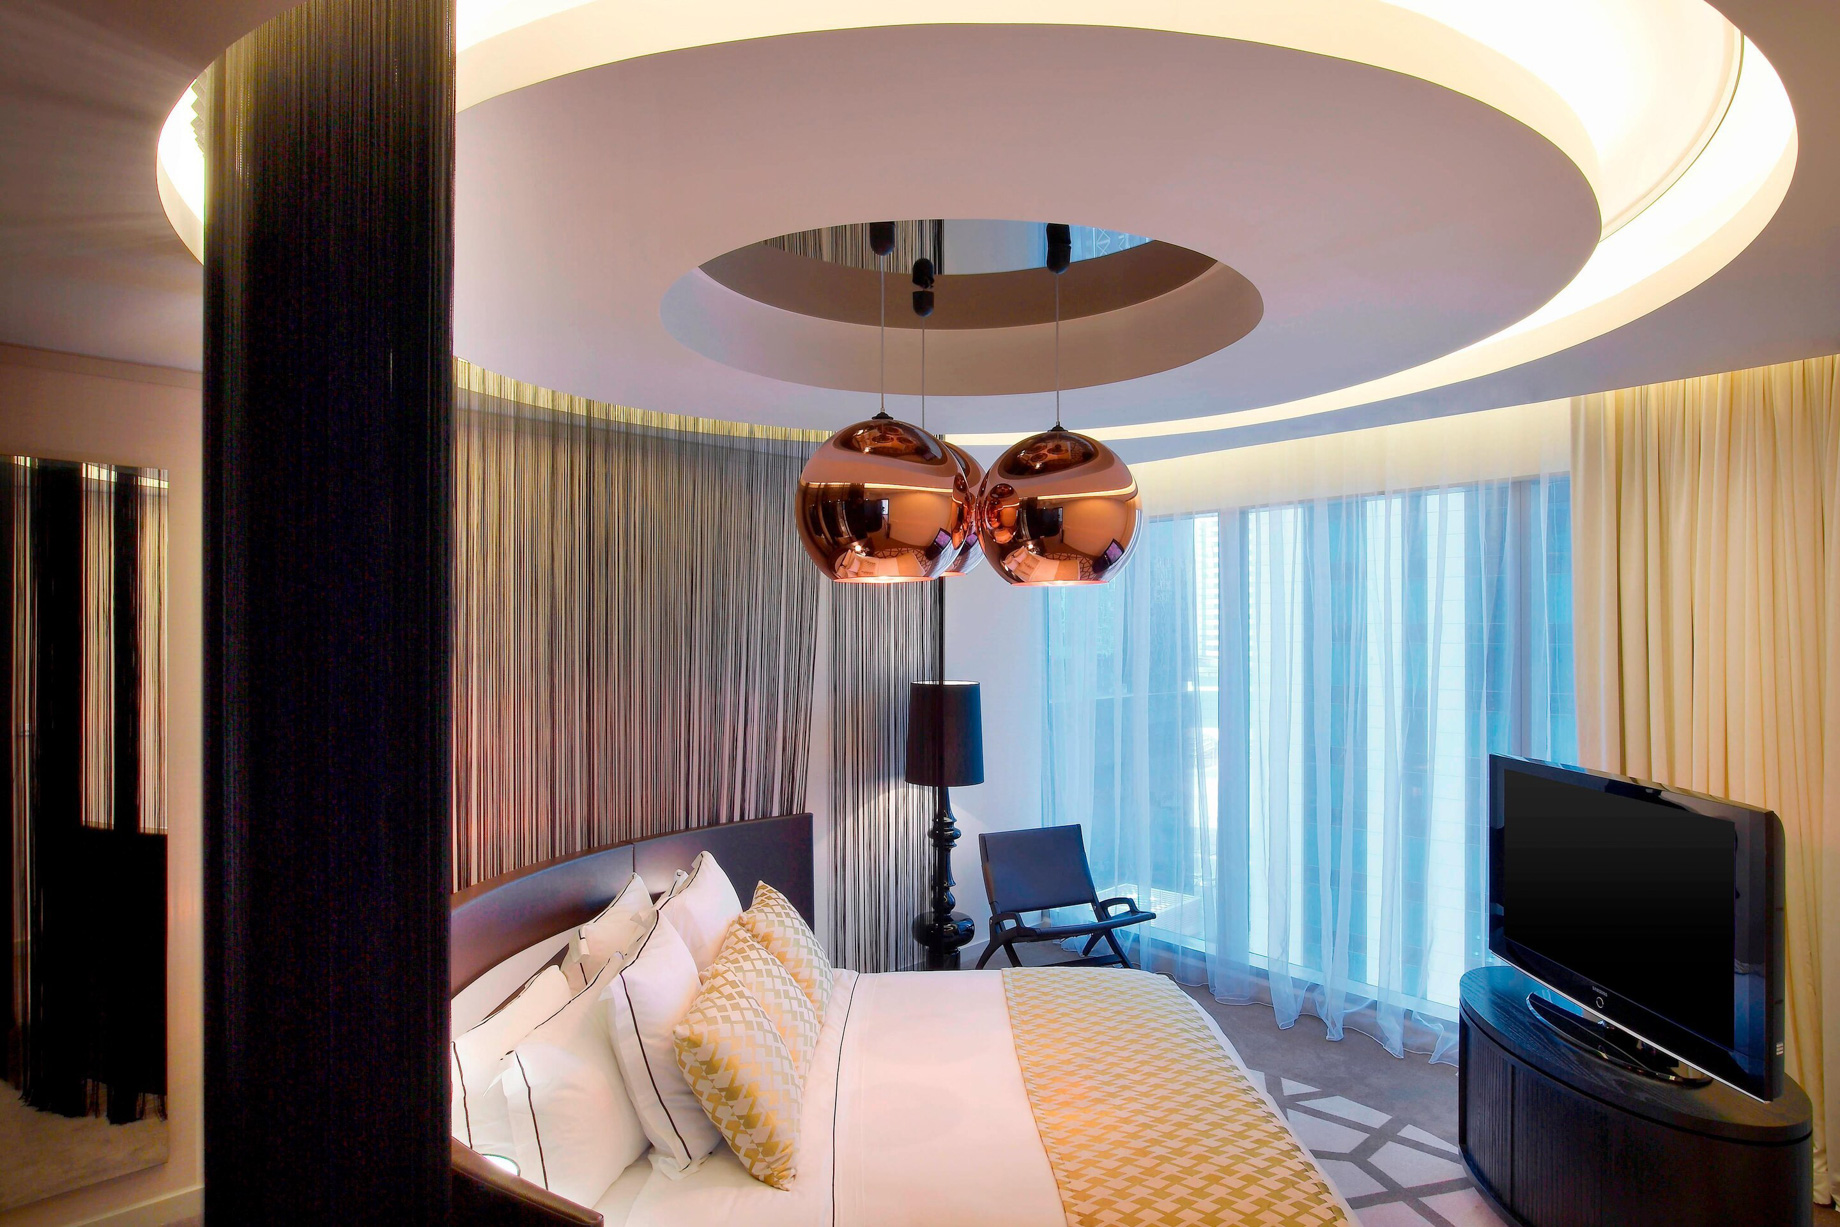 W Doha Hotel – Doha, Qatar – W Suite Bedroom Decor